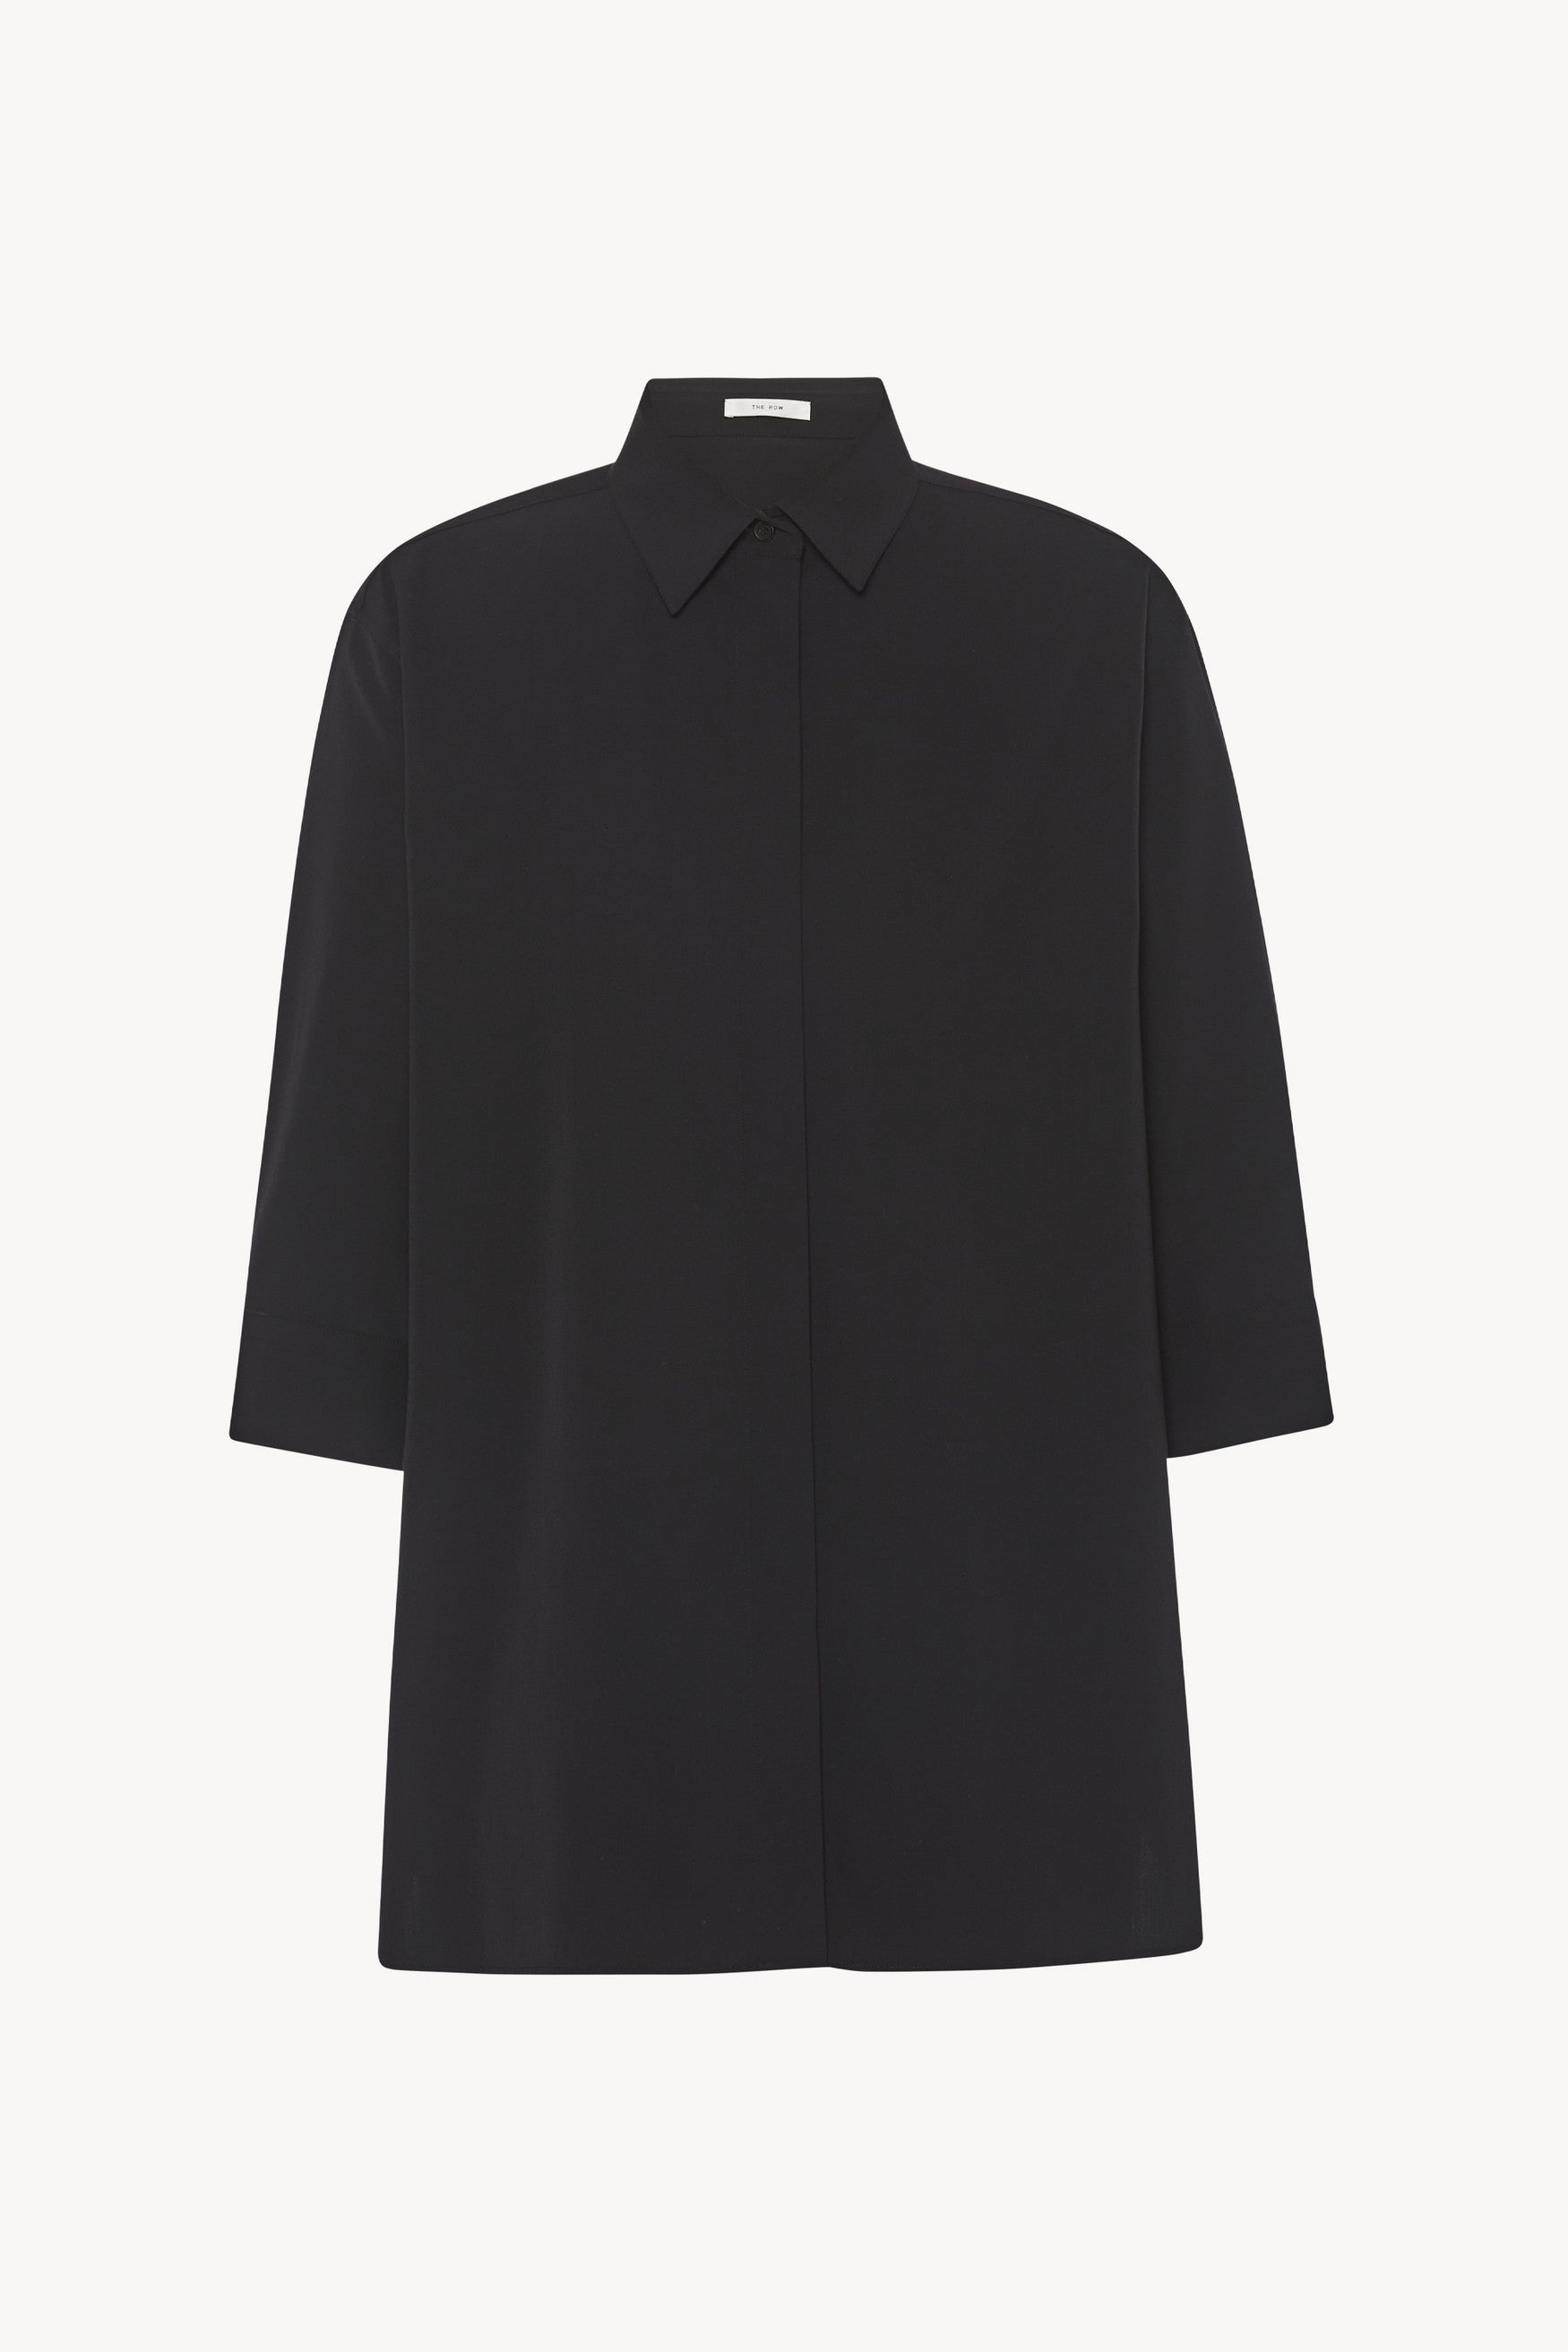 Elada Shirt Black in Viscose and Wool – The Row